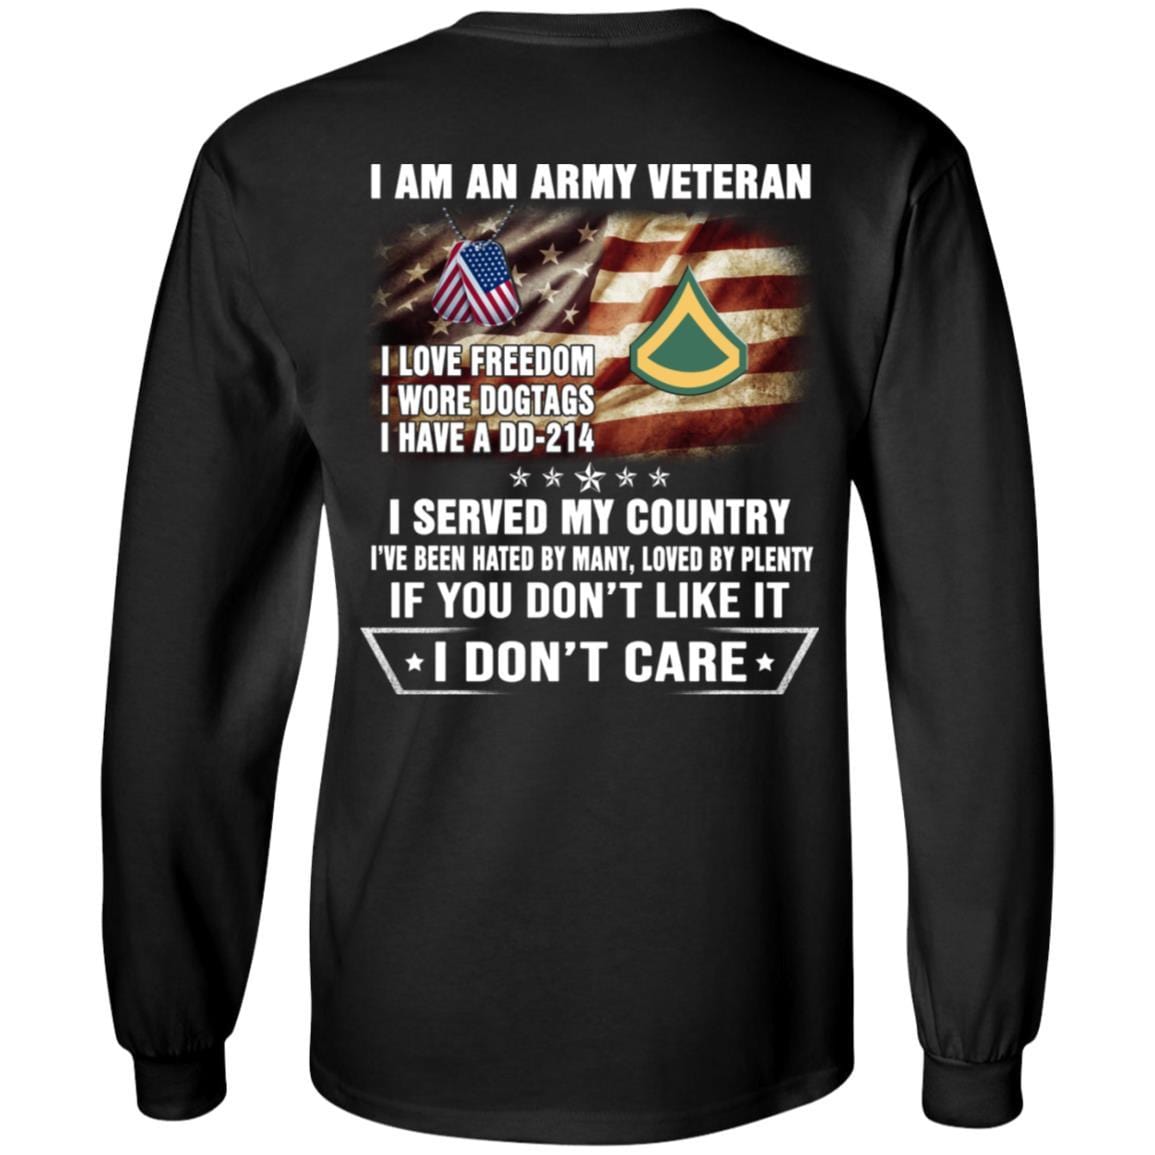 T-Shirt "I Am An Army Veteran" E-3 Private First Class(PFC)Rank On Back-TShirt-Army-Veterans Nation